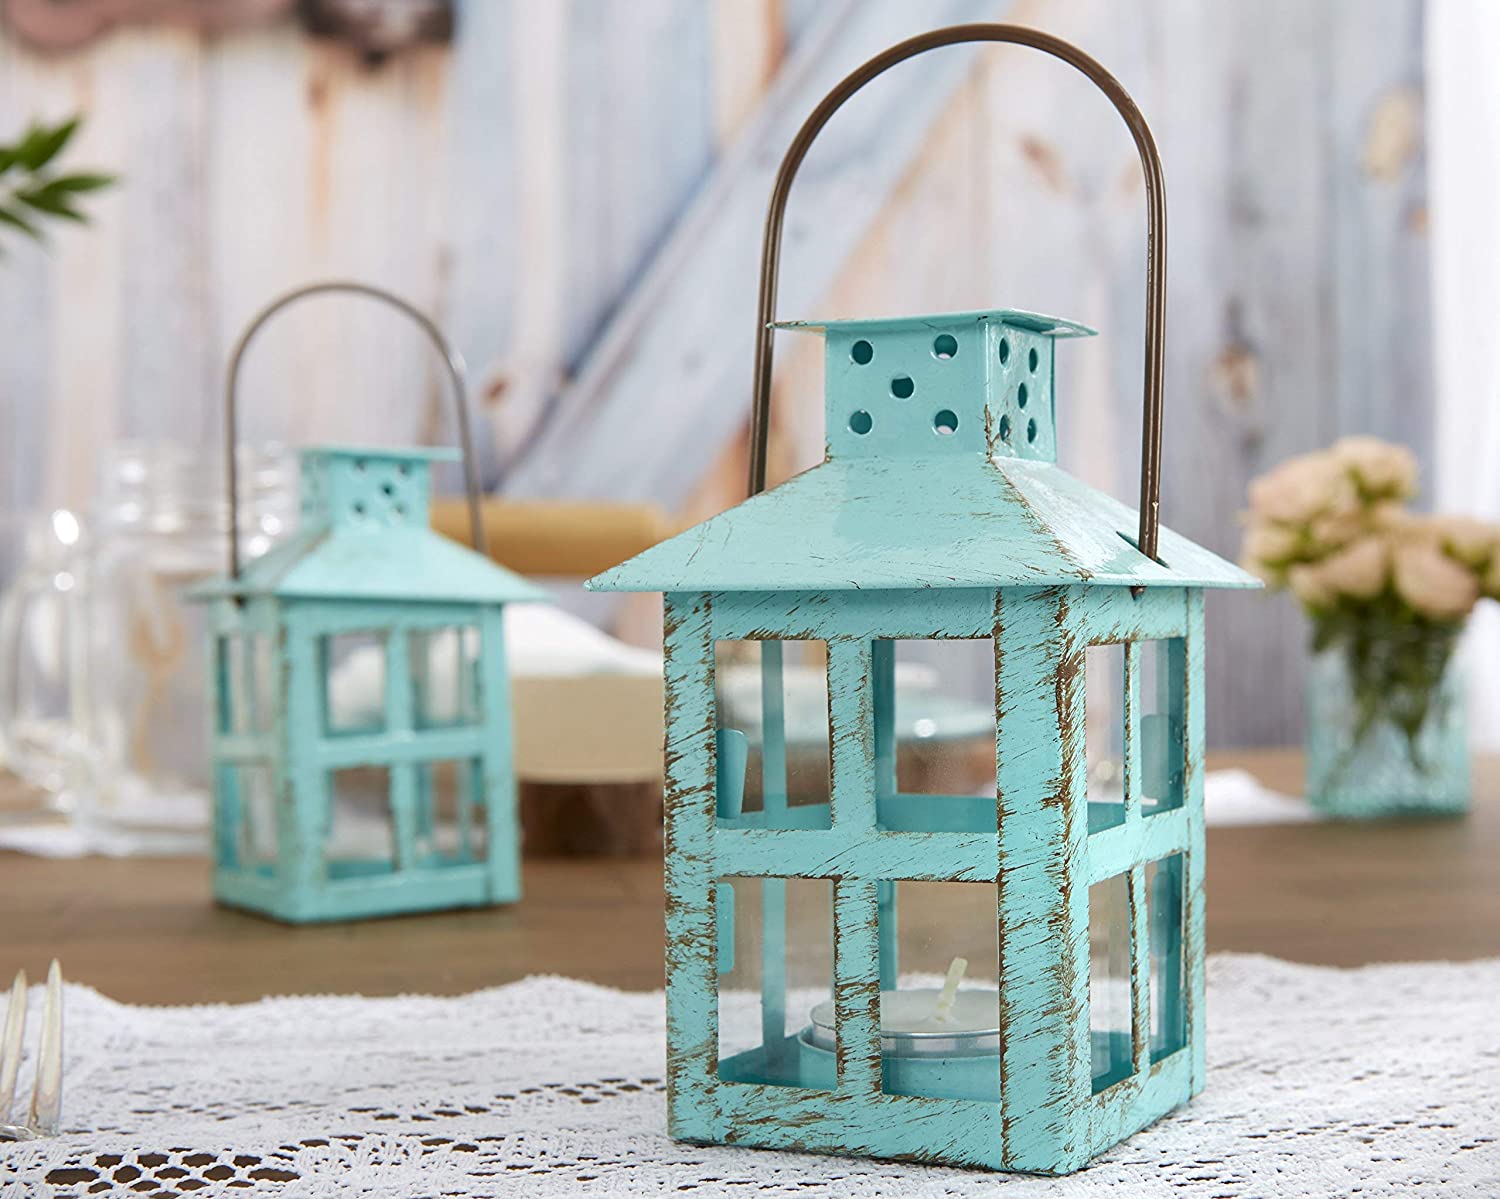 TK Spring Home Decor To Brighten Up Your Space Option: Mini Decorative Lanterns